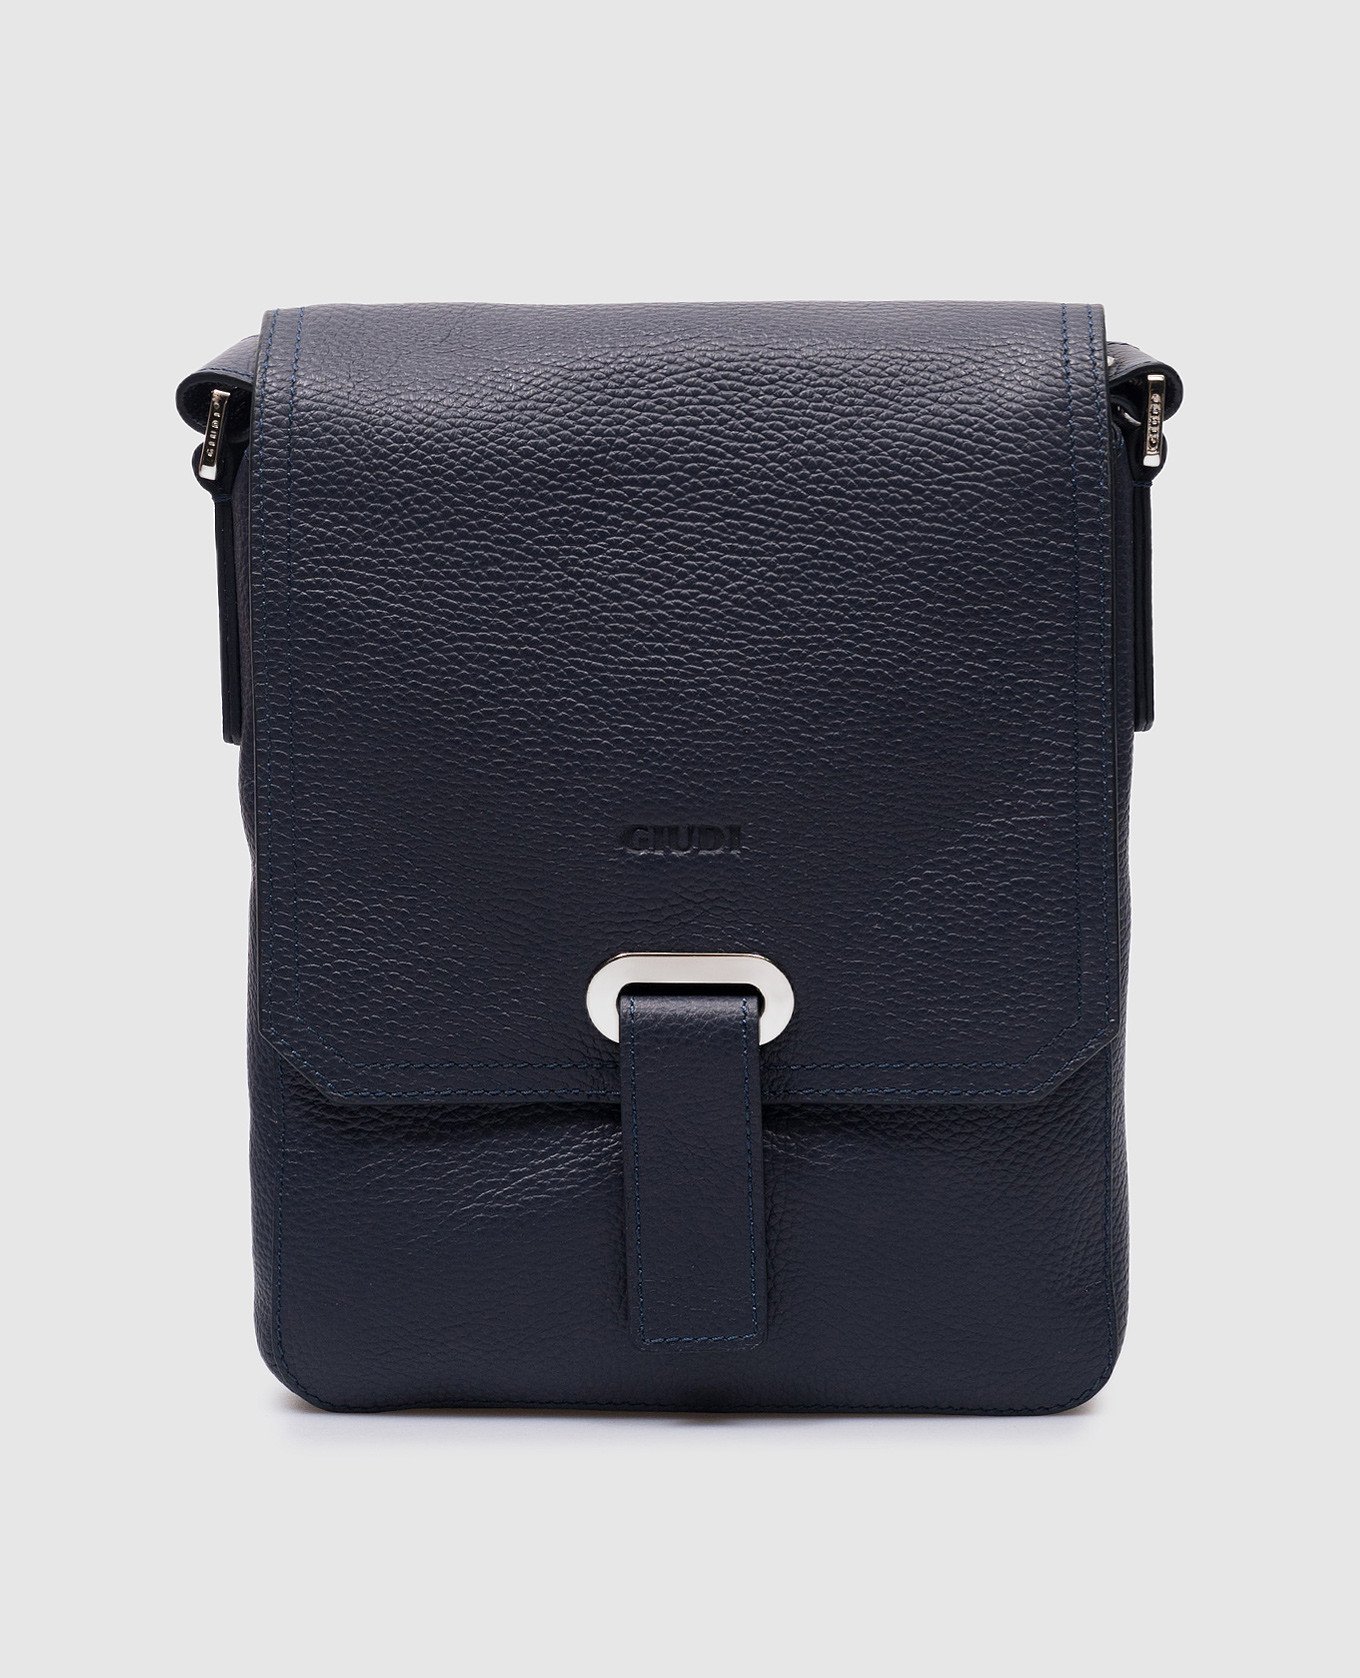 Синяя кожаная сумка-месенджен с тиснением логотипа